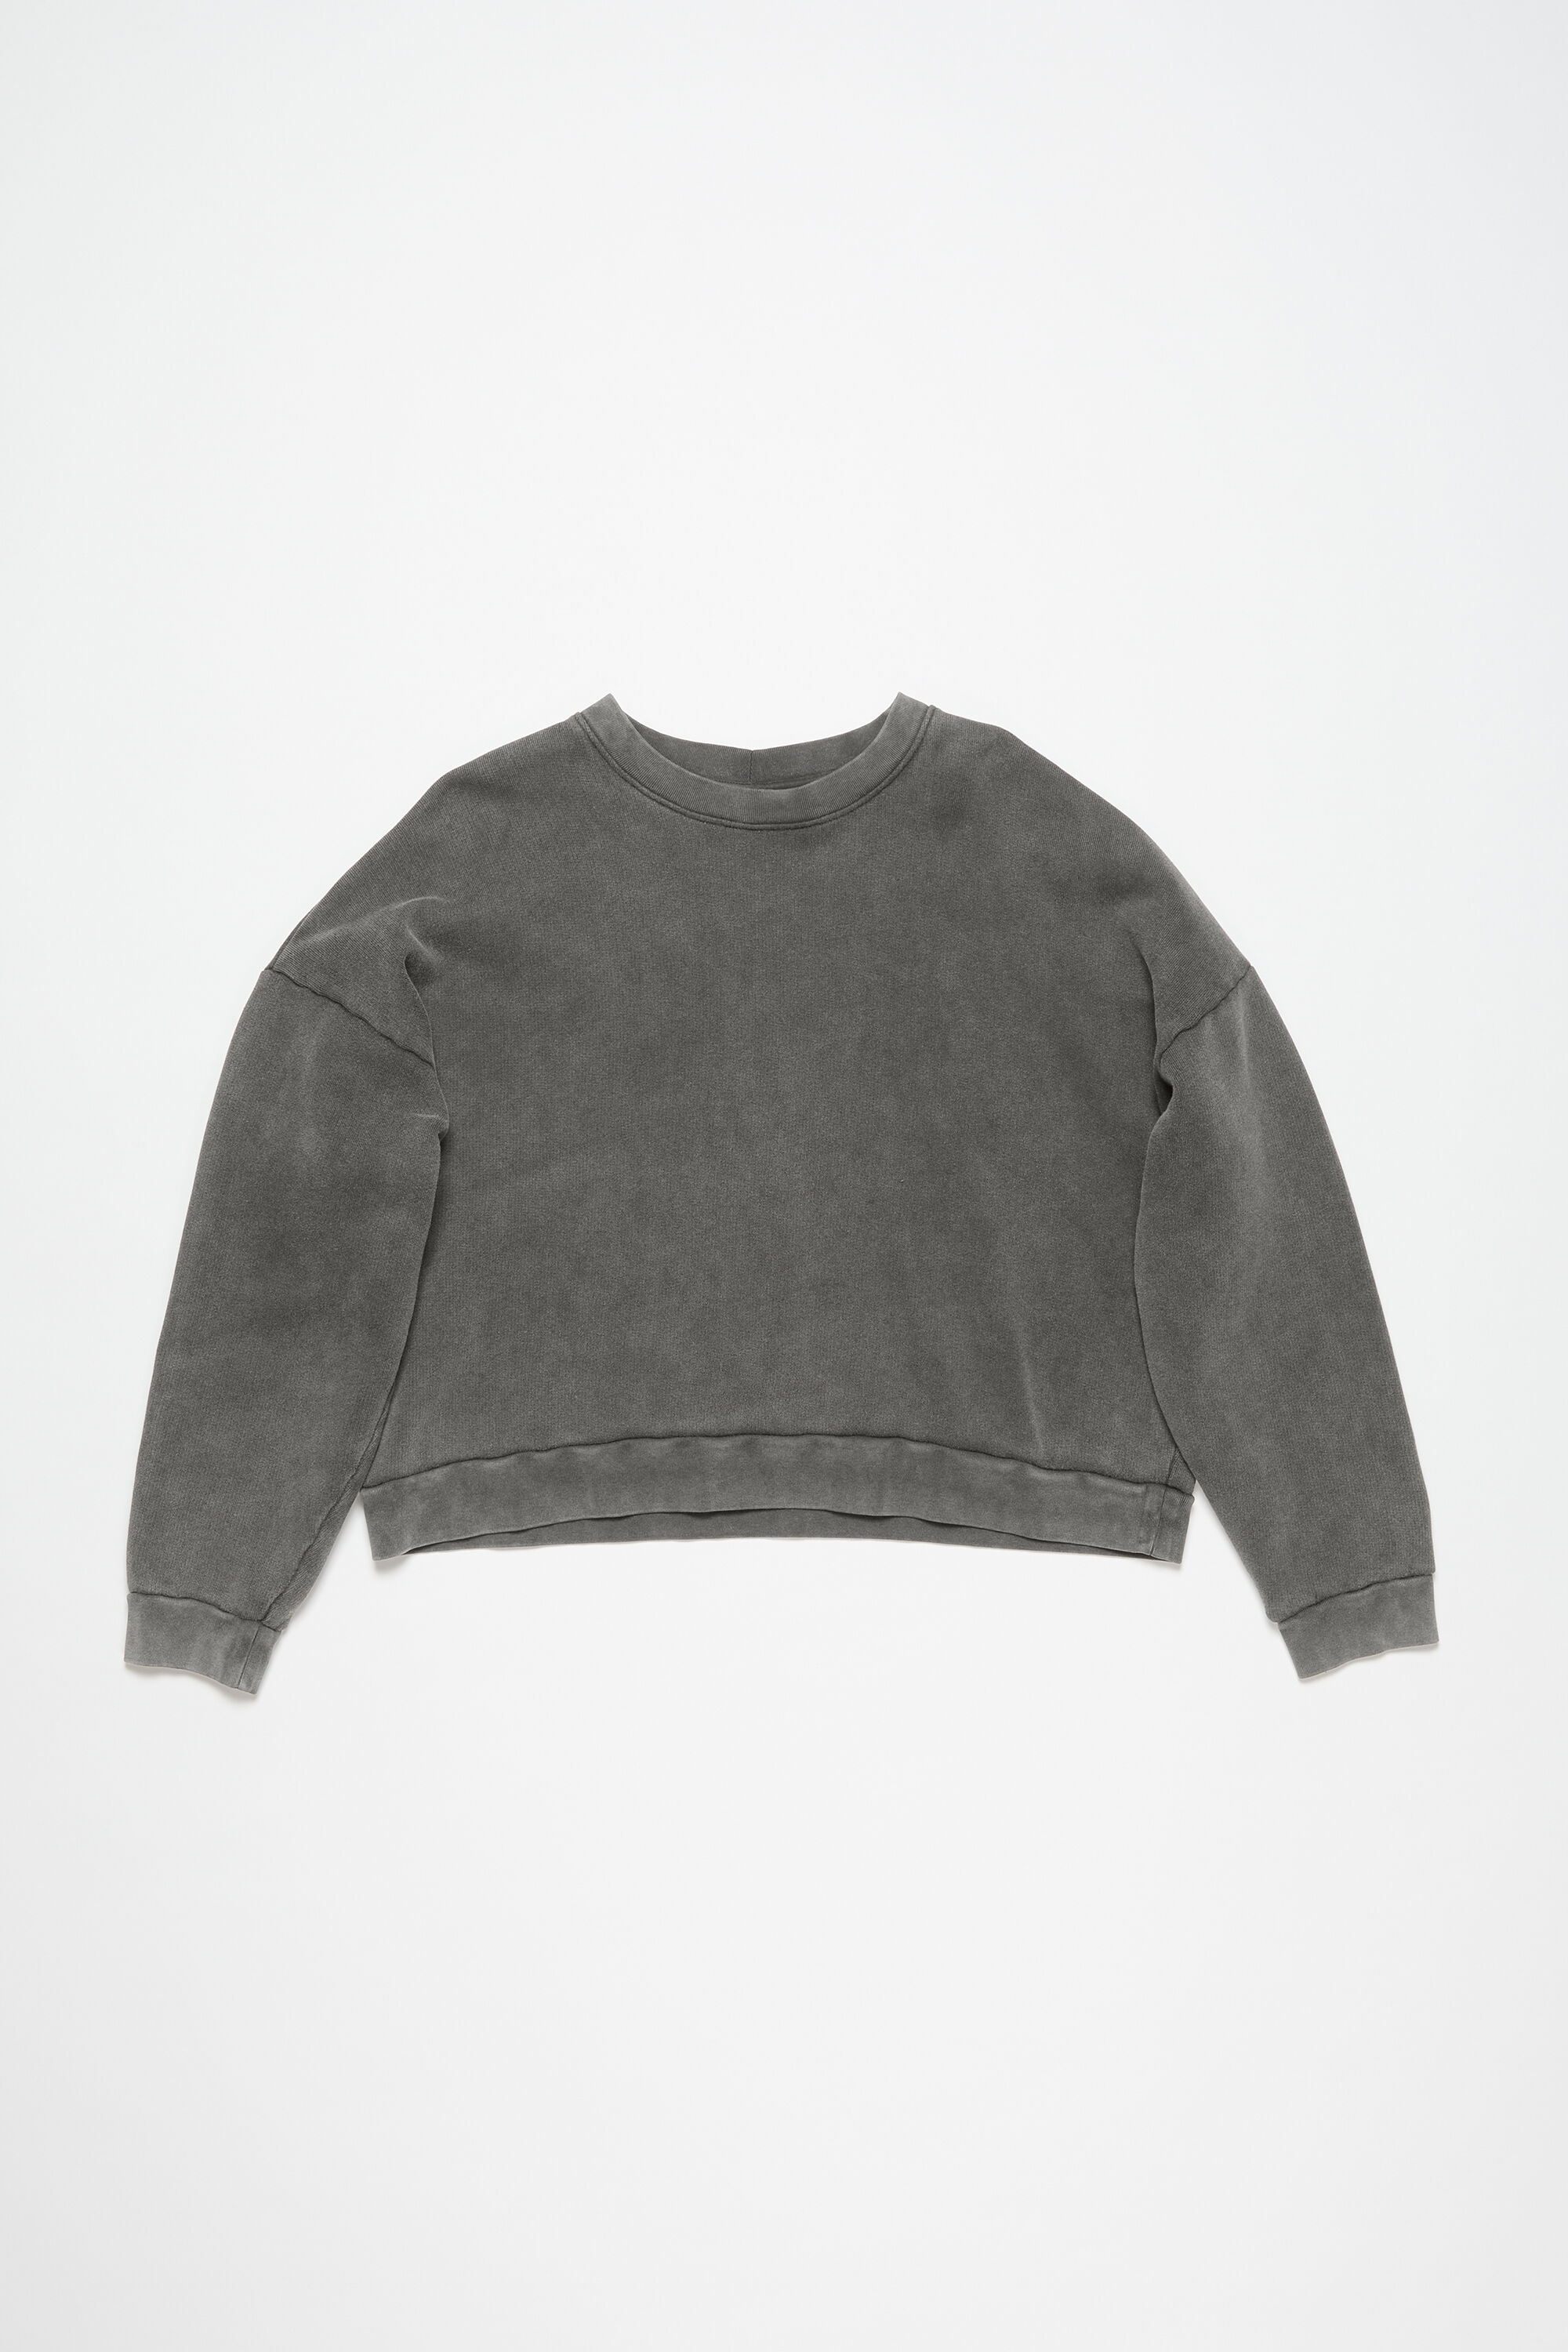 Acne Studios - Sweater logo patch - Faded black